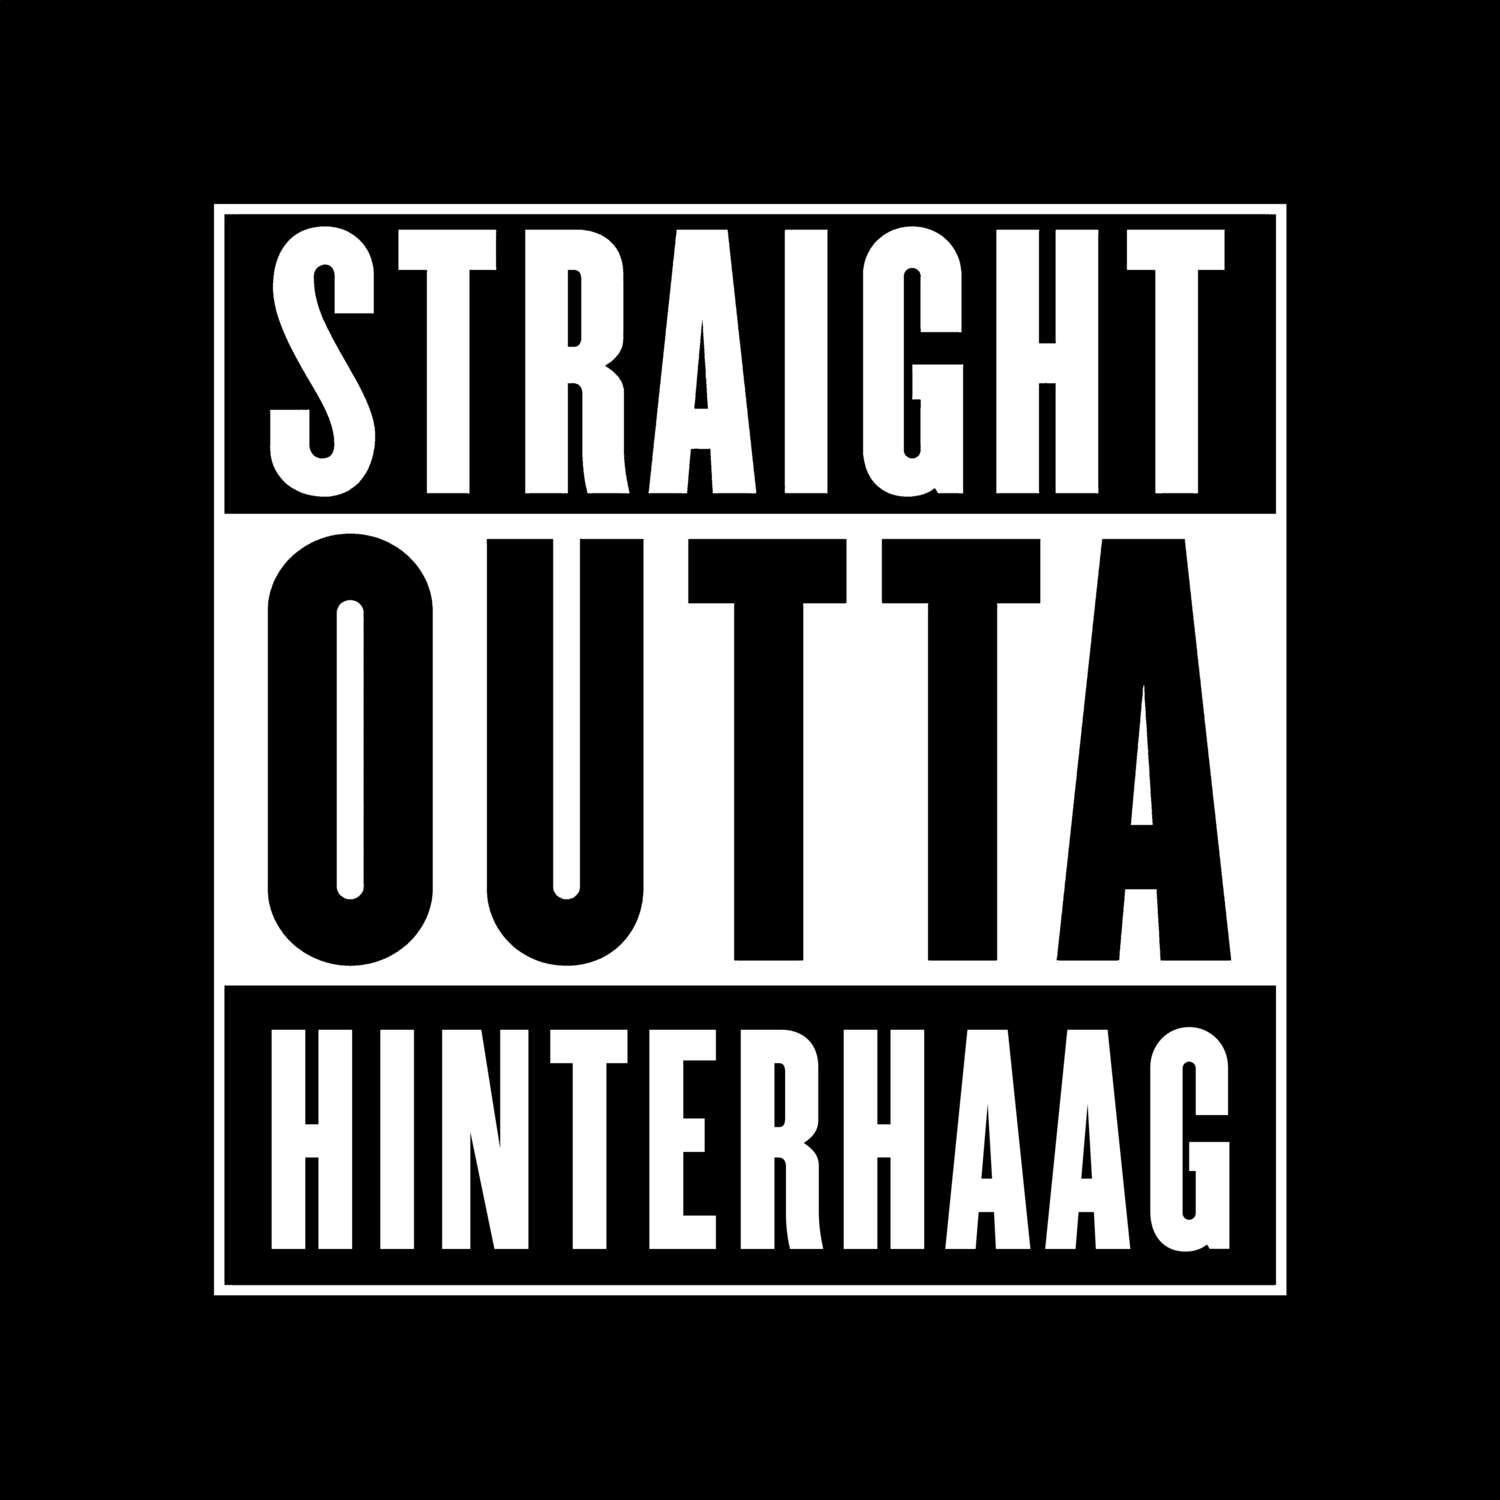 Hinterhaag T-Shirt »Straight Outta«